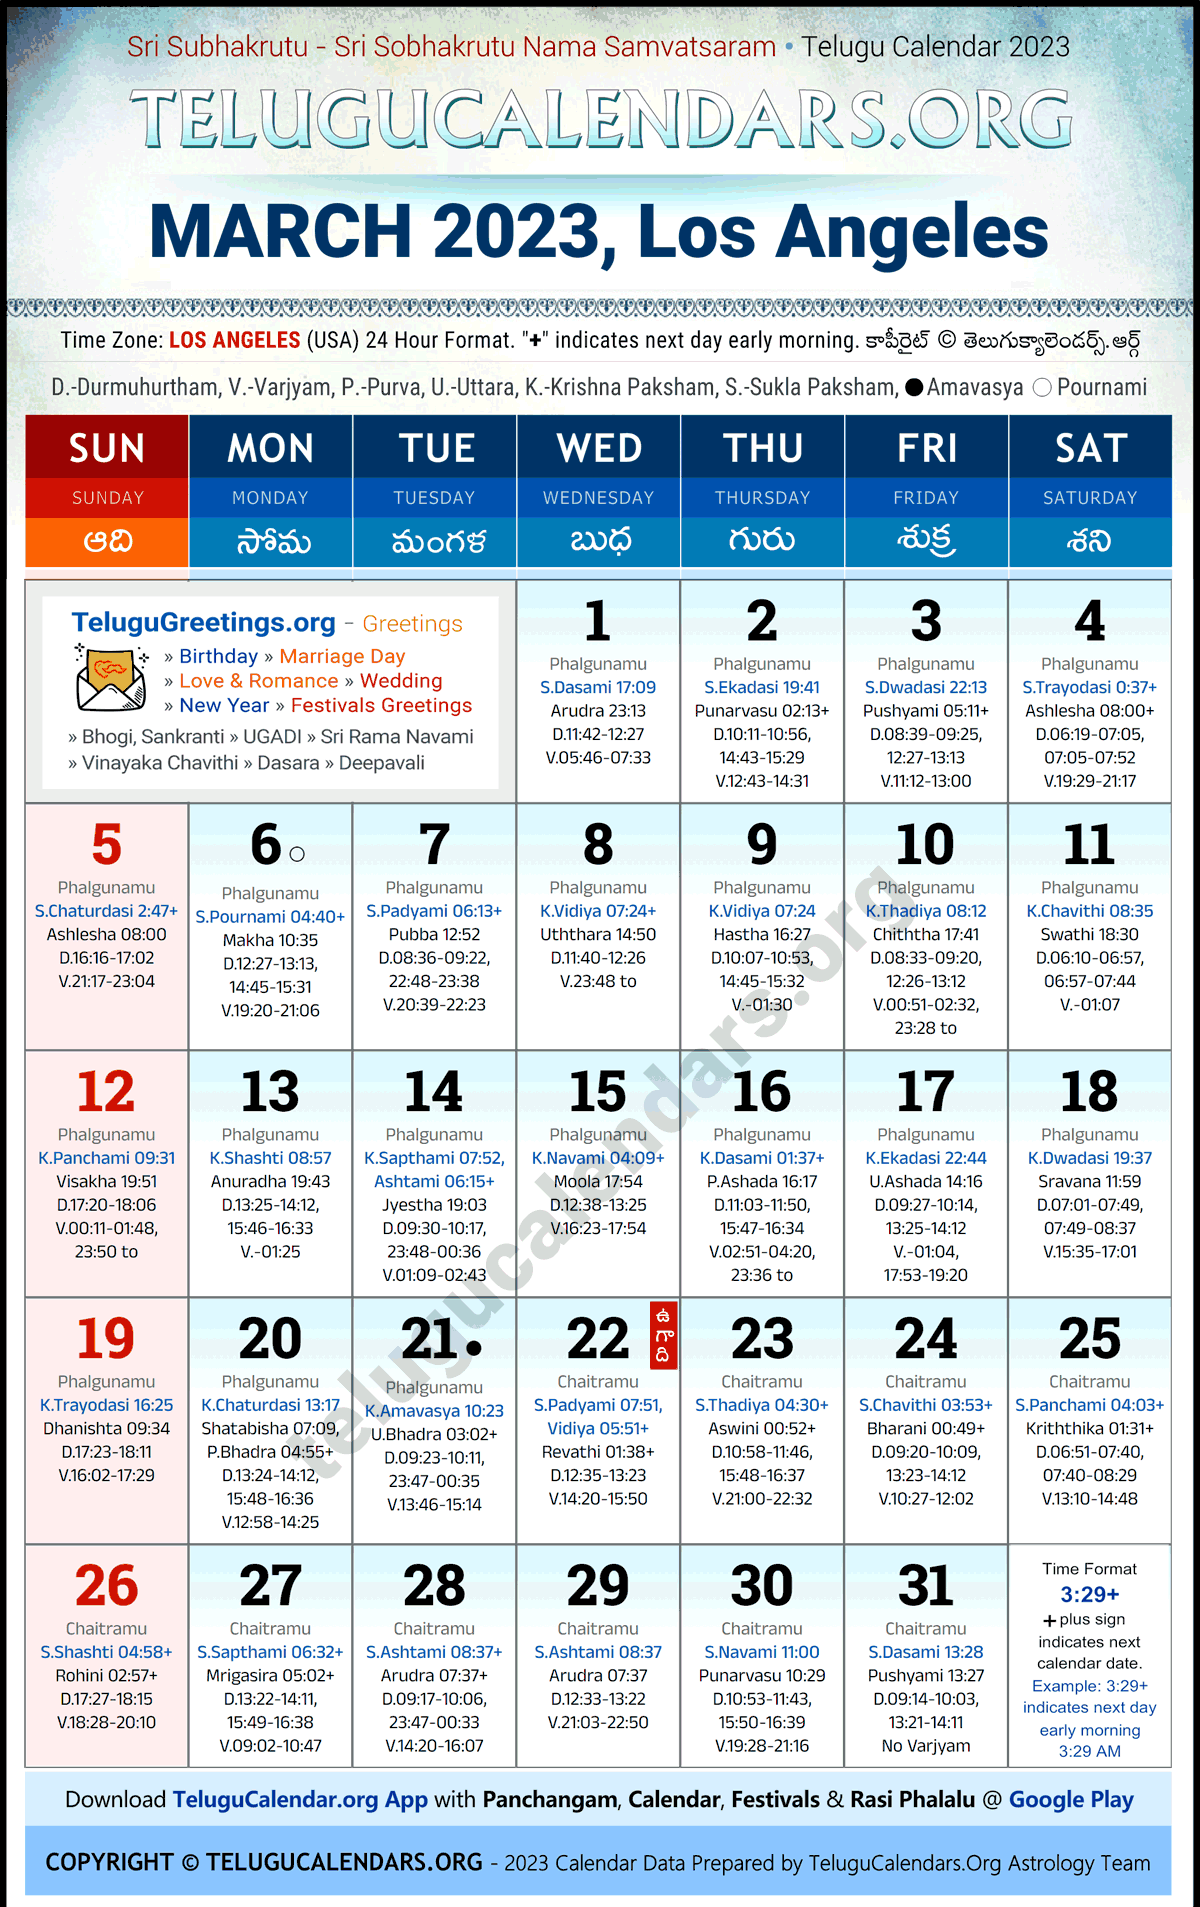 Telugu Calendar 2023 March Festivals for Los Angeles